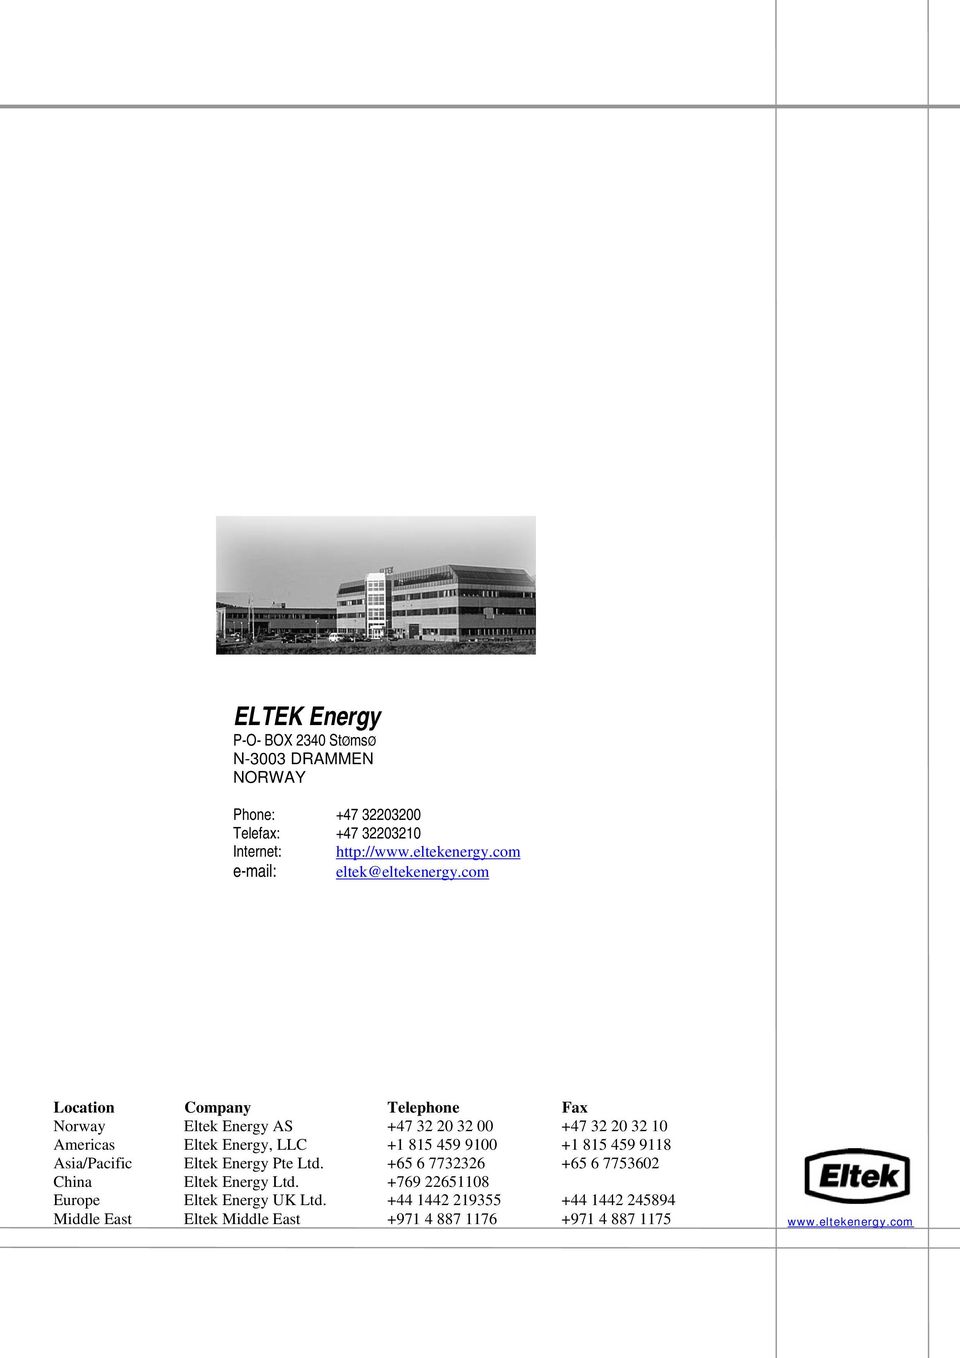 com Location Company Telephone Fax Norway Eltek Energy AS +47 32 20 32 00 +47 32 20 32 10 Americas Eltek Energy, LLC +1 815 459 9100 +1